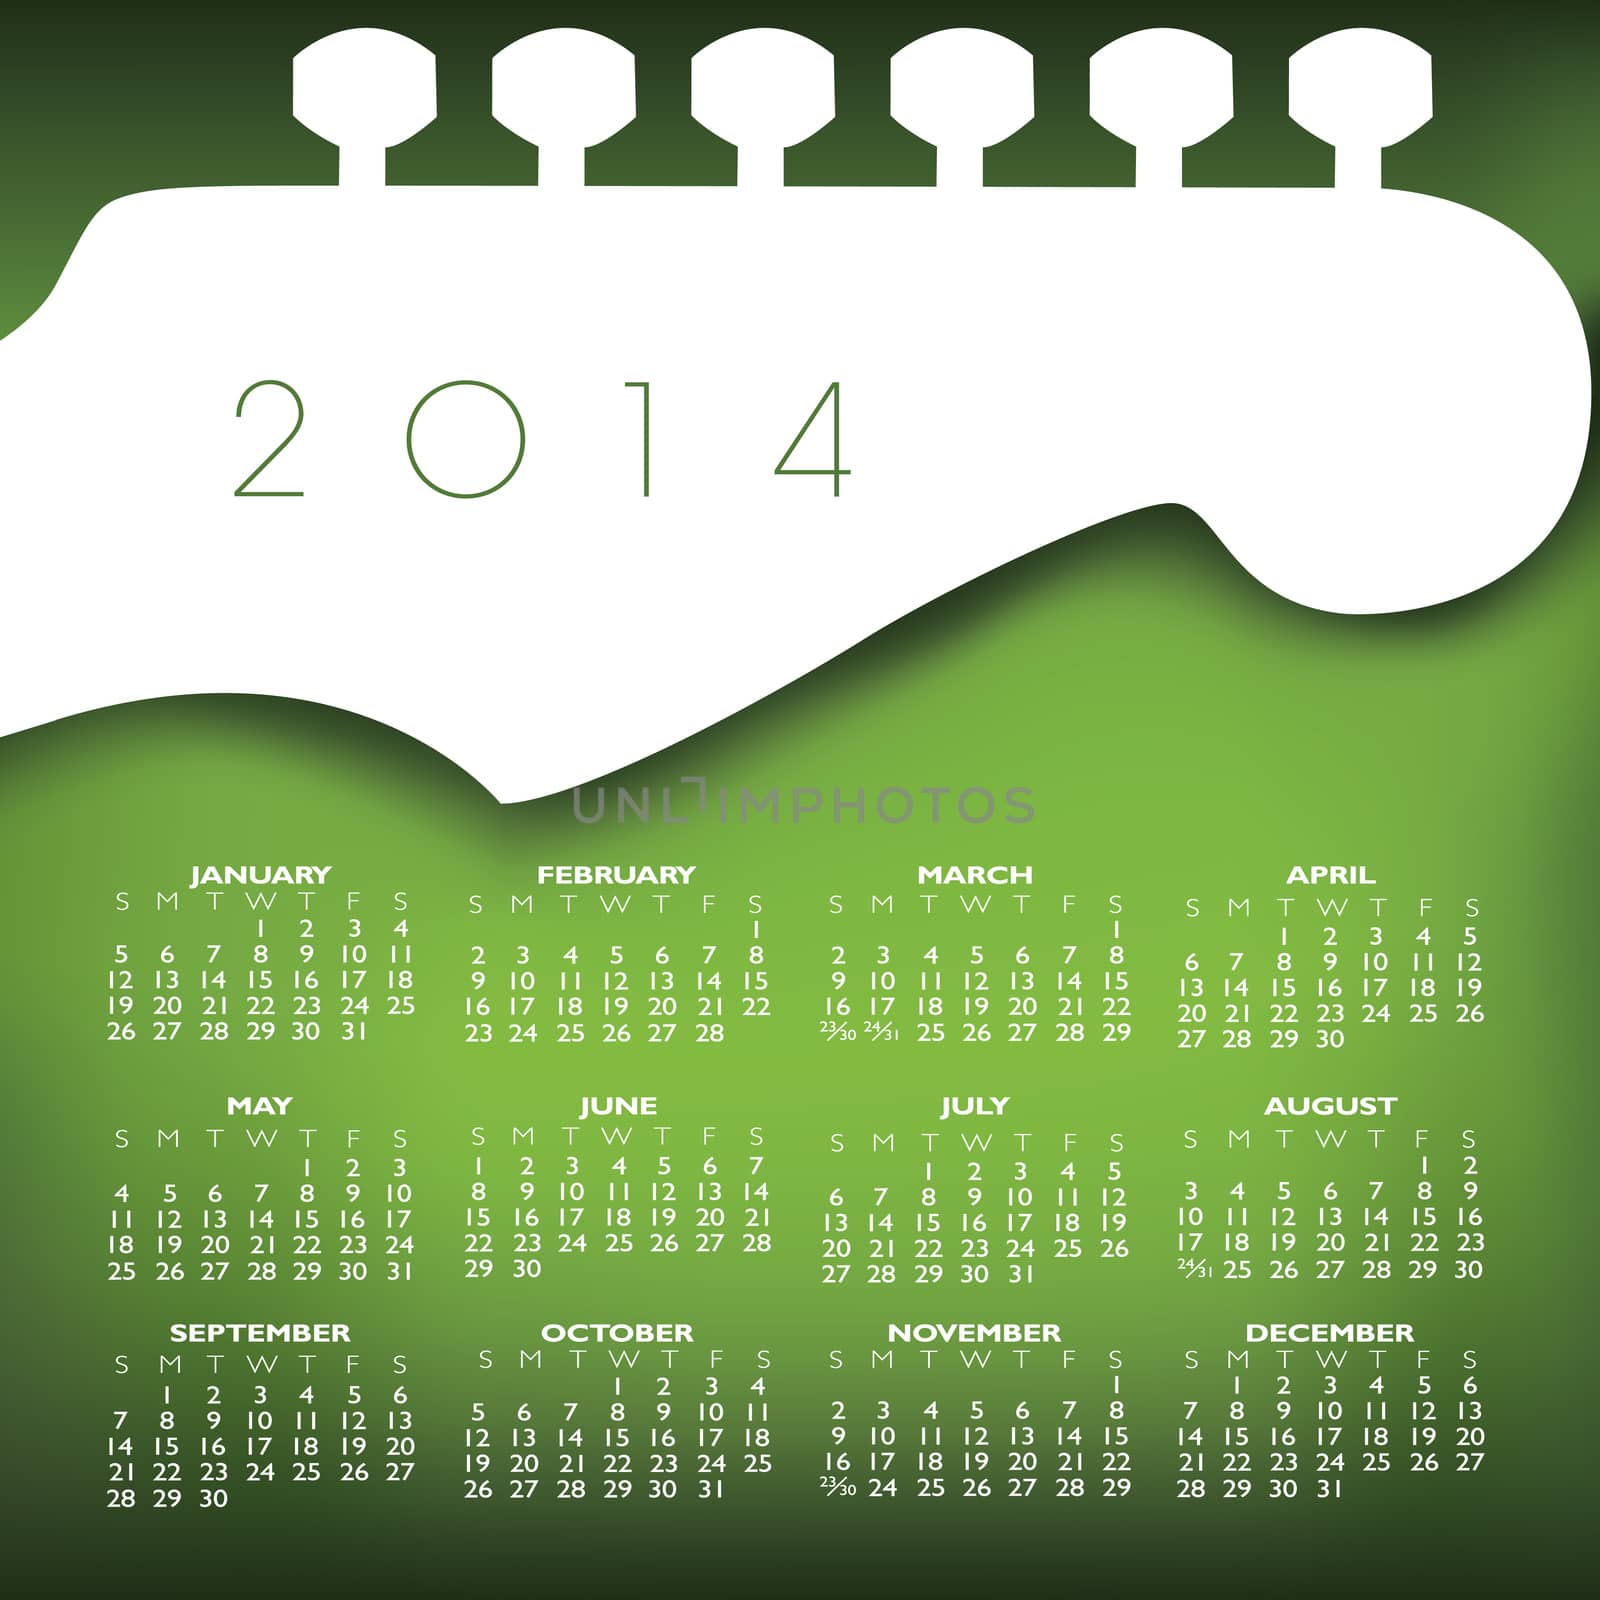 2014 Guitar Creative Calendar by mike301